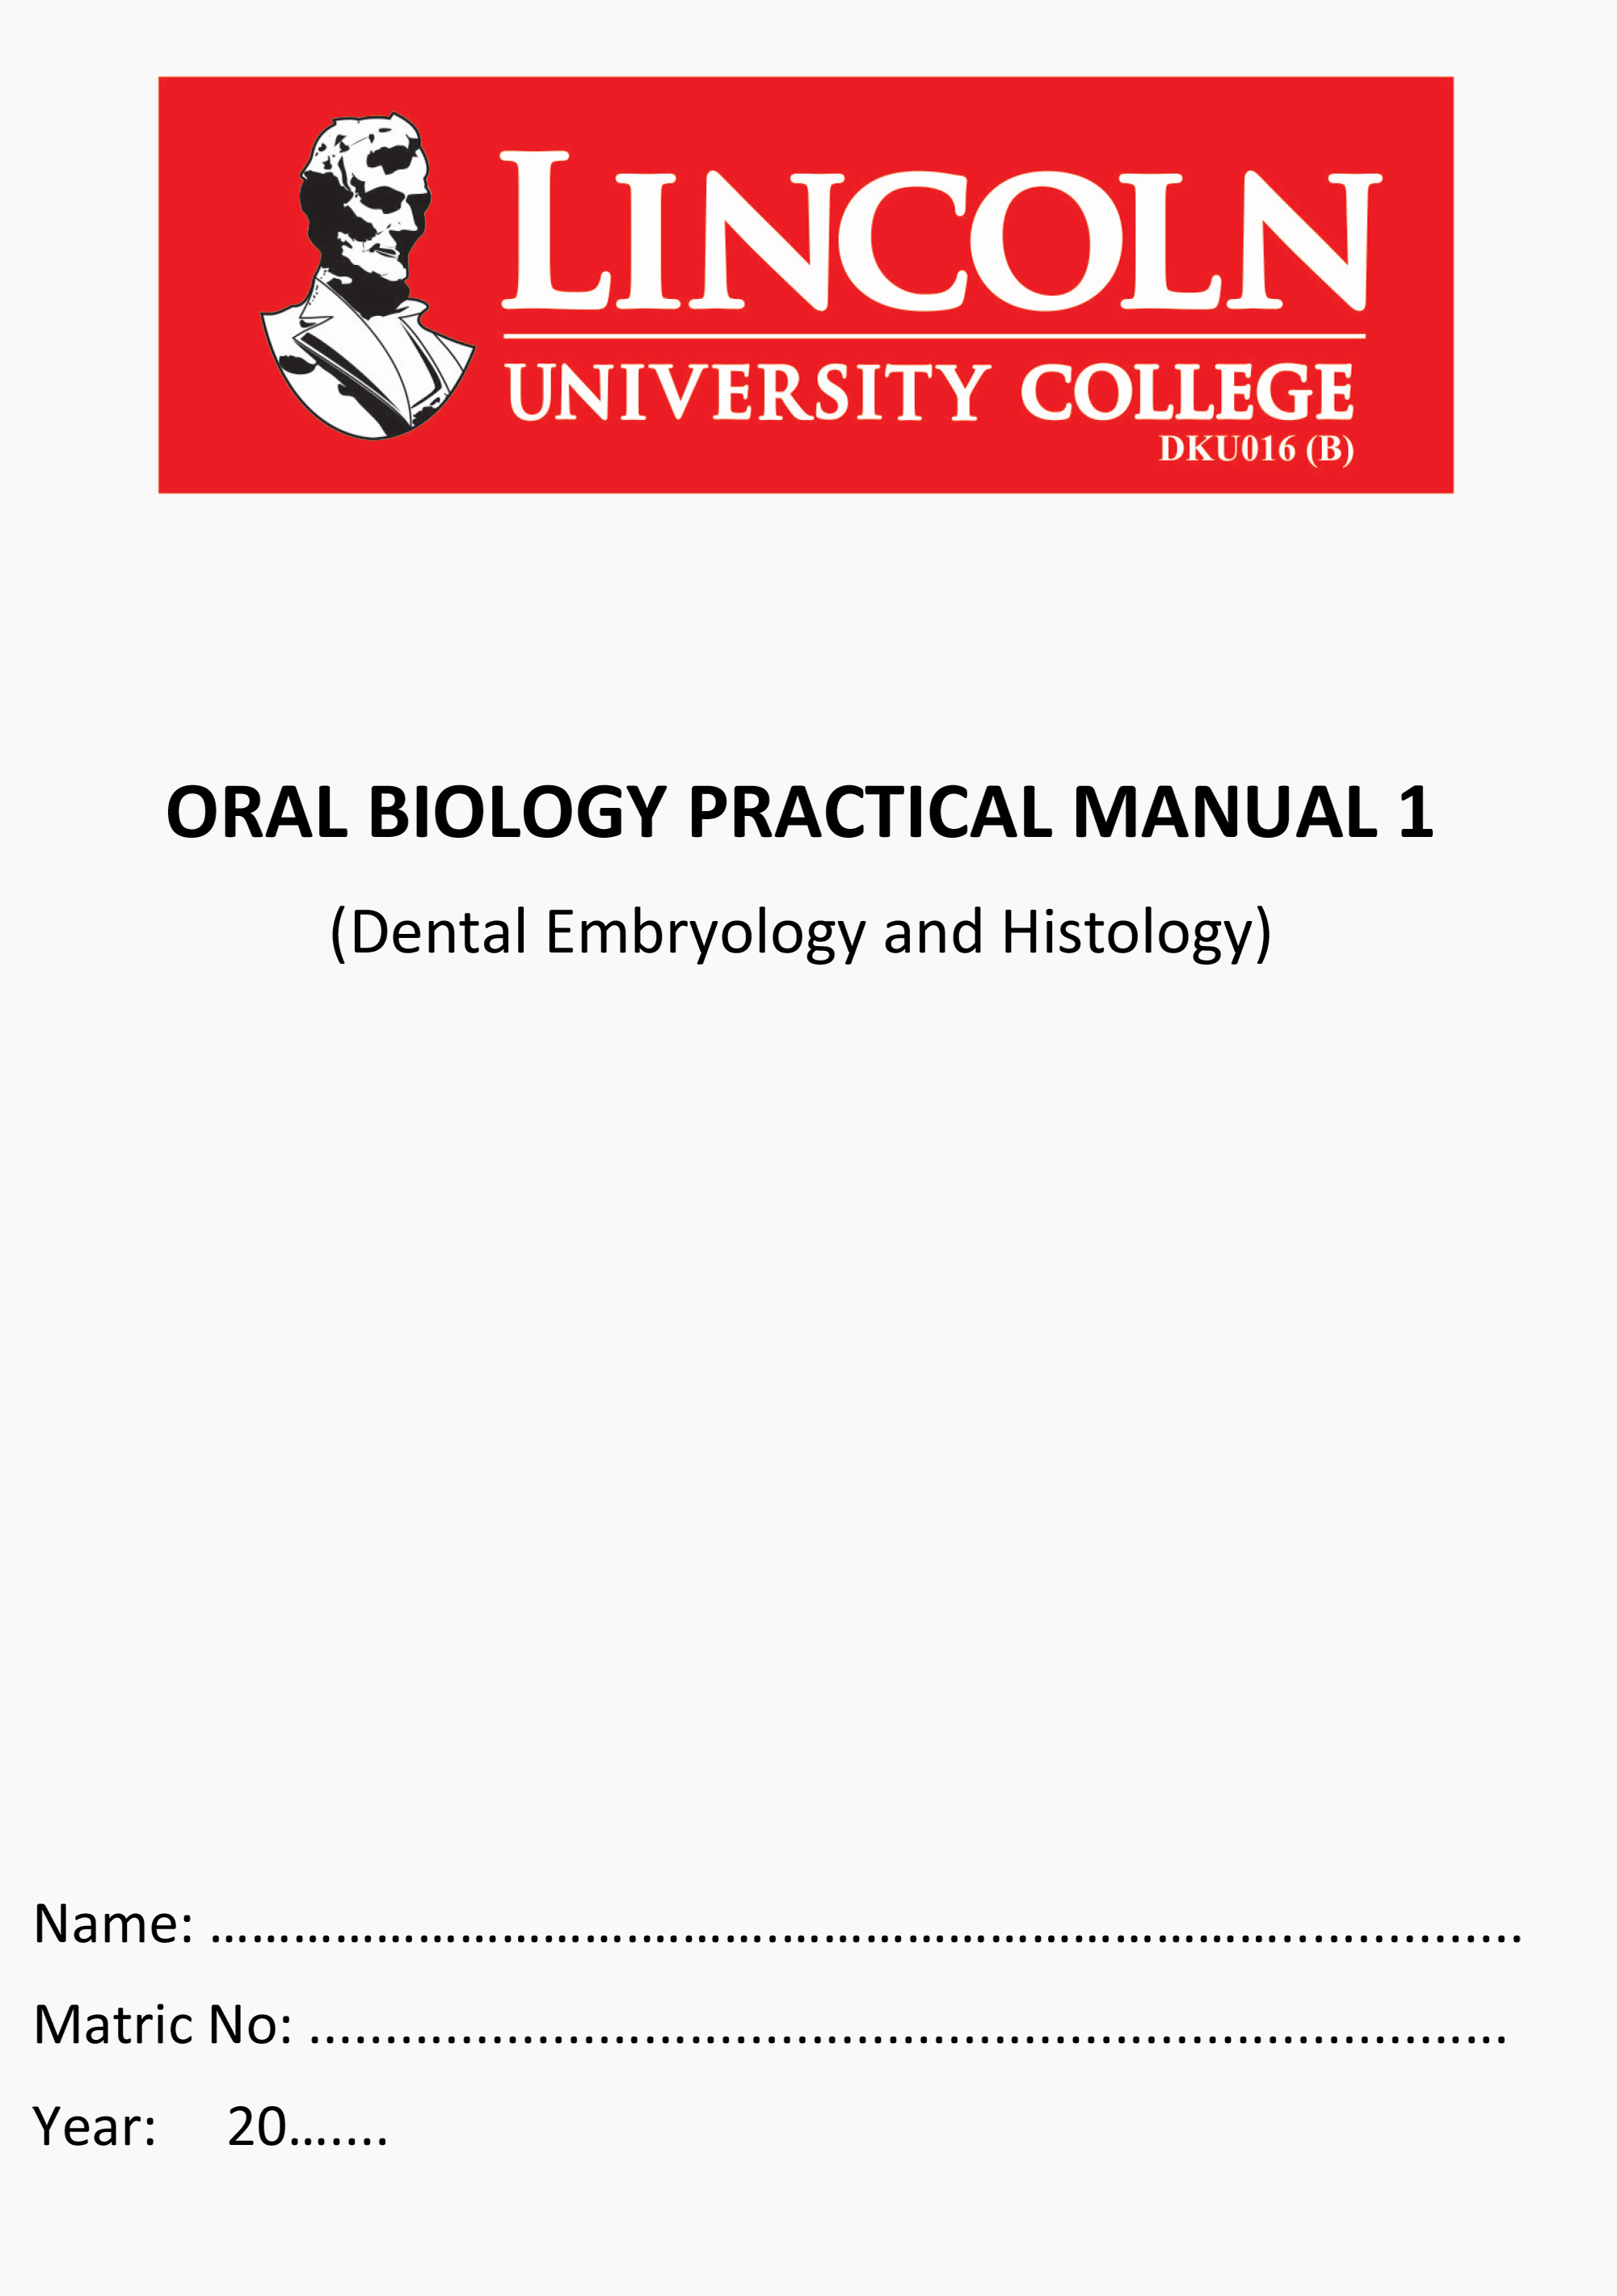 Oral-Biology-Practical-Manual-1